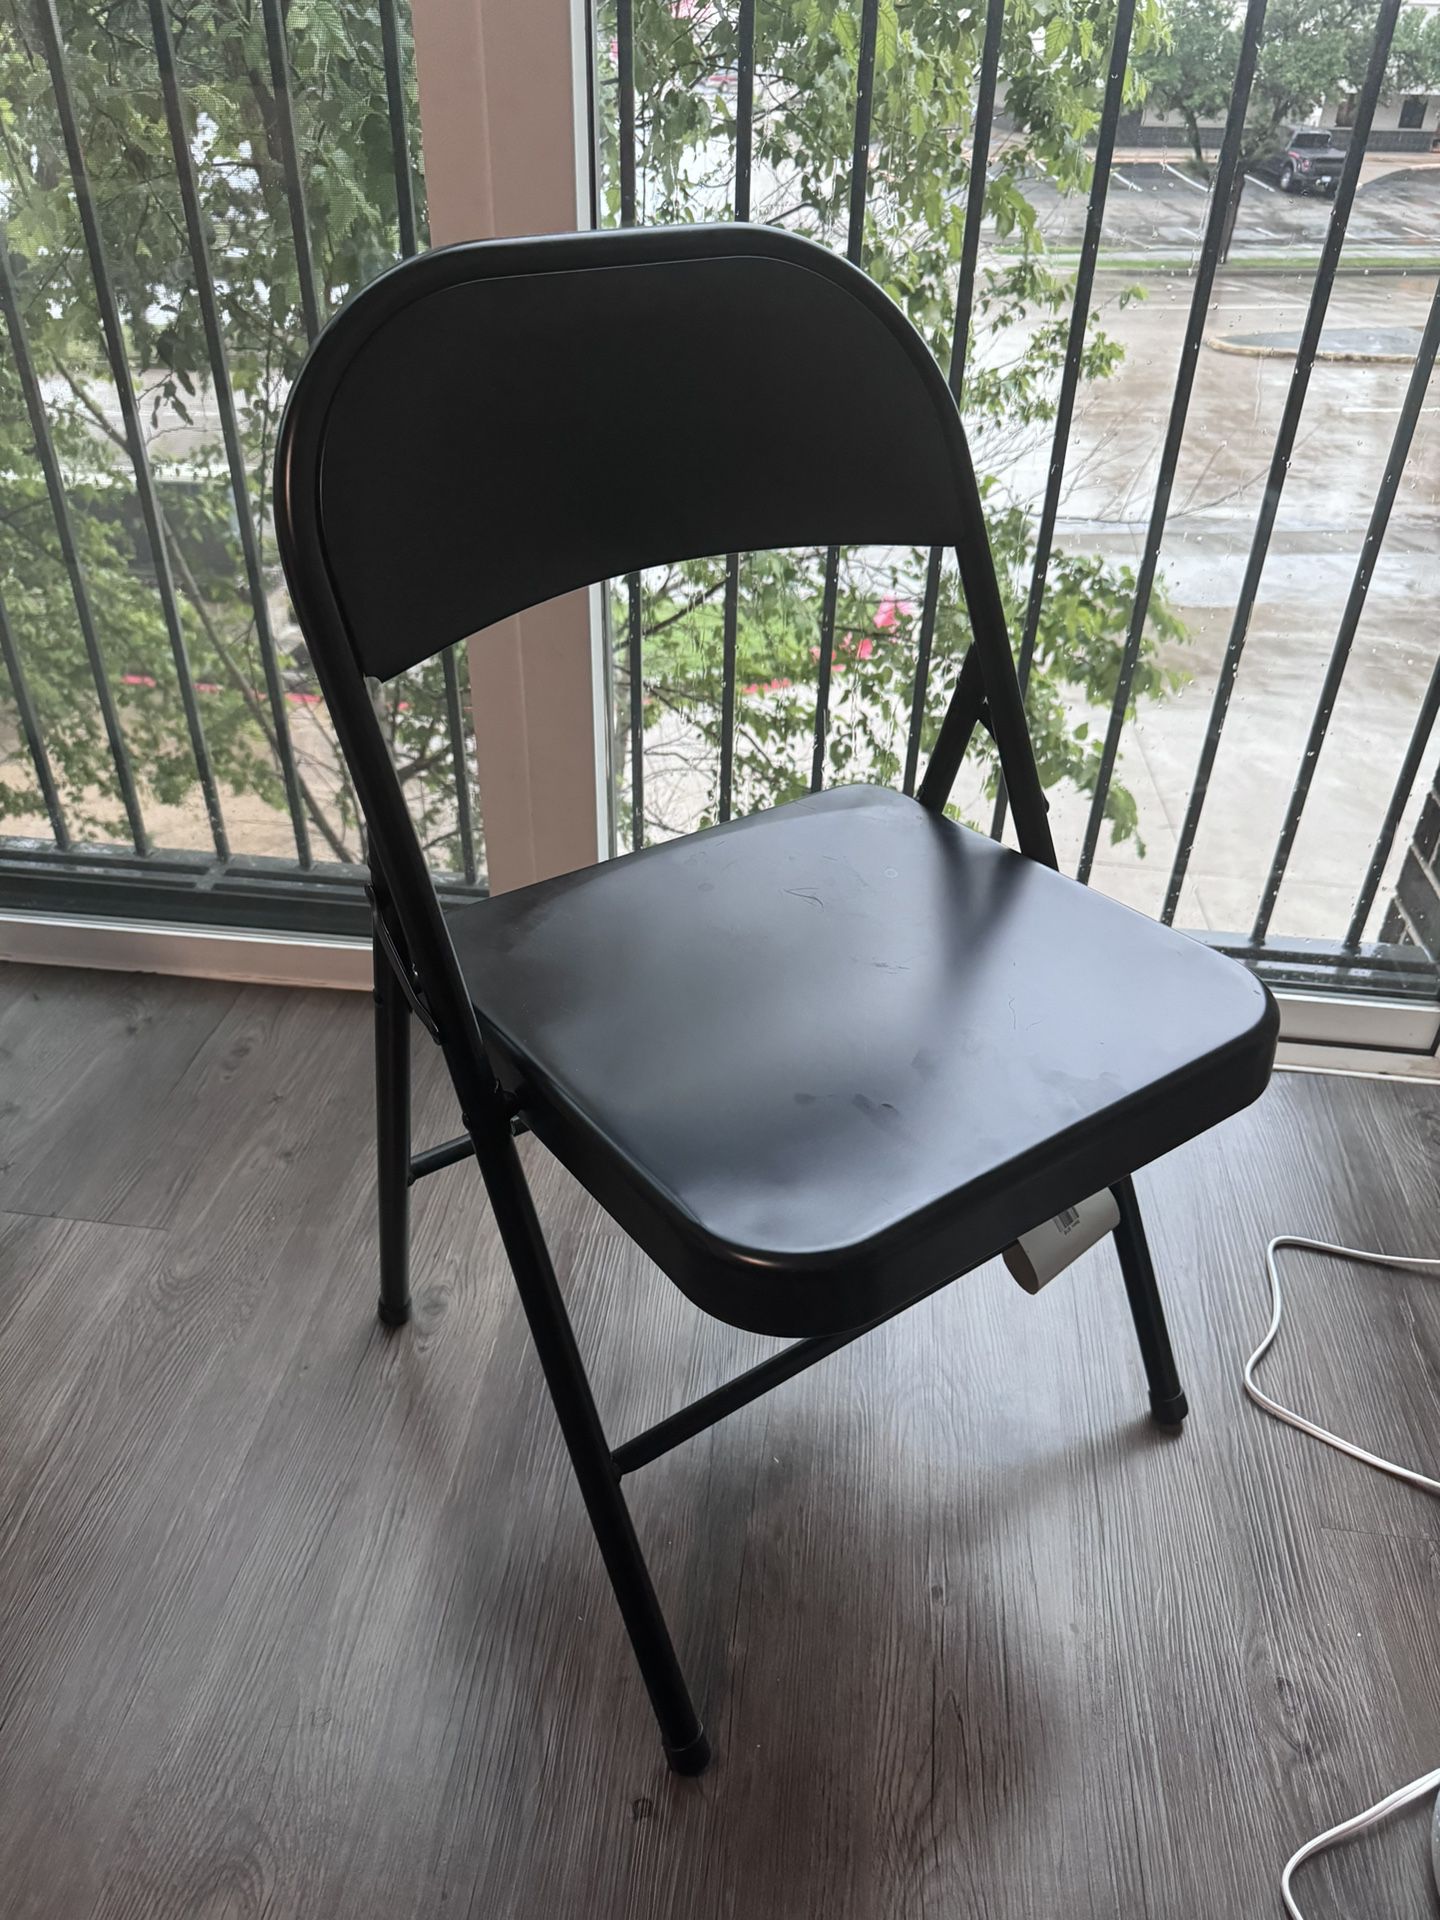 Black folding Chair - $7